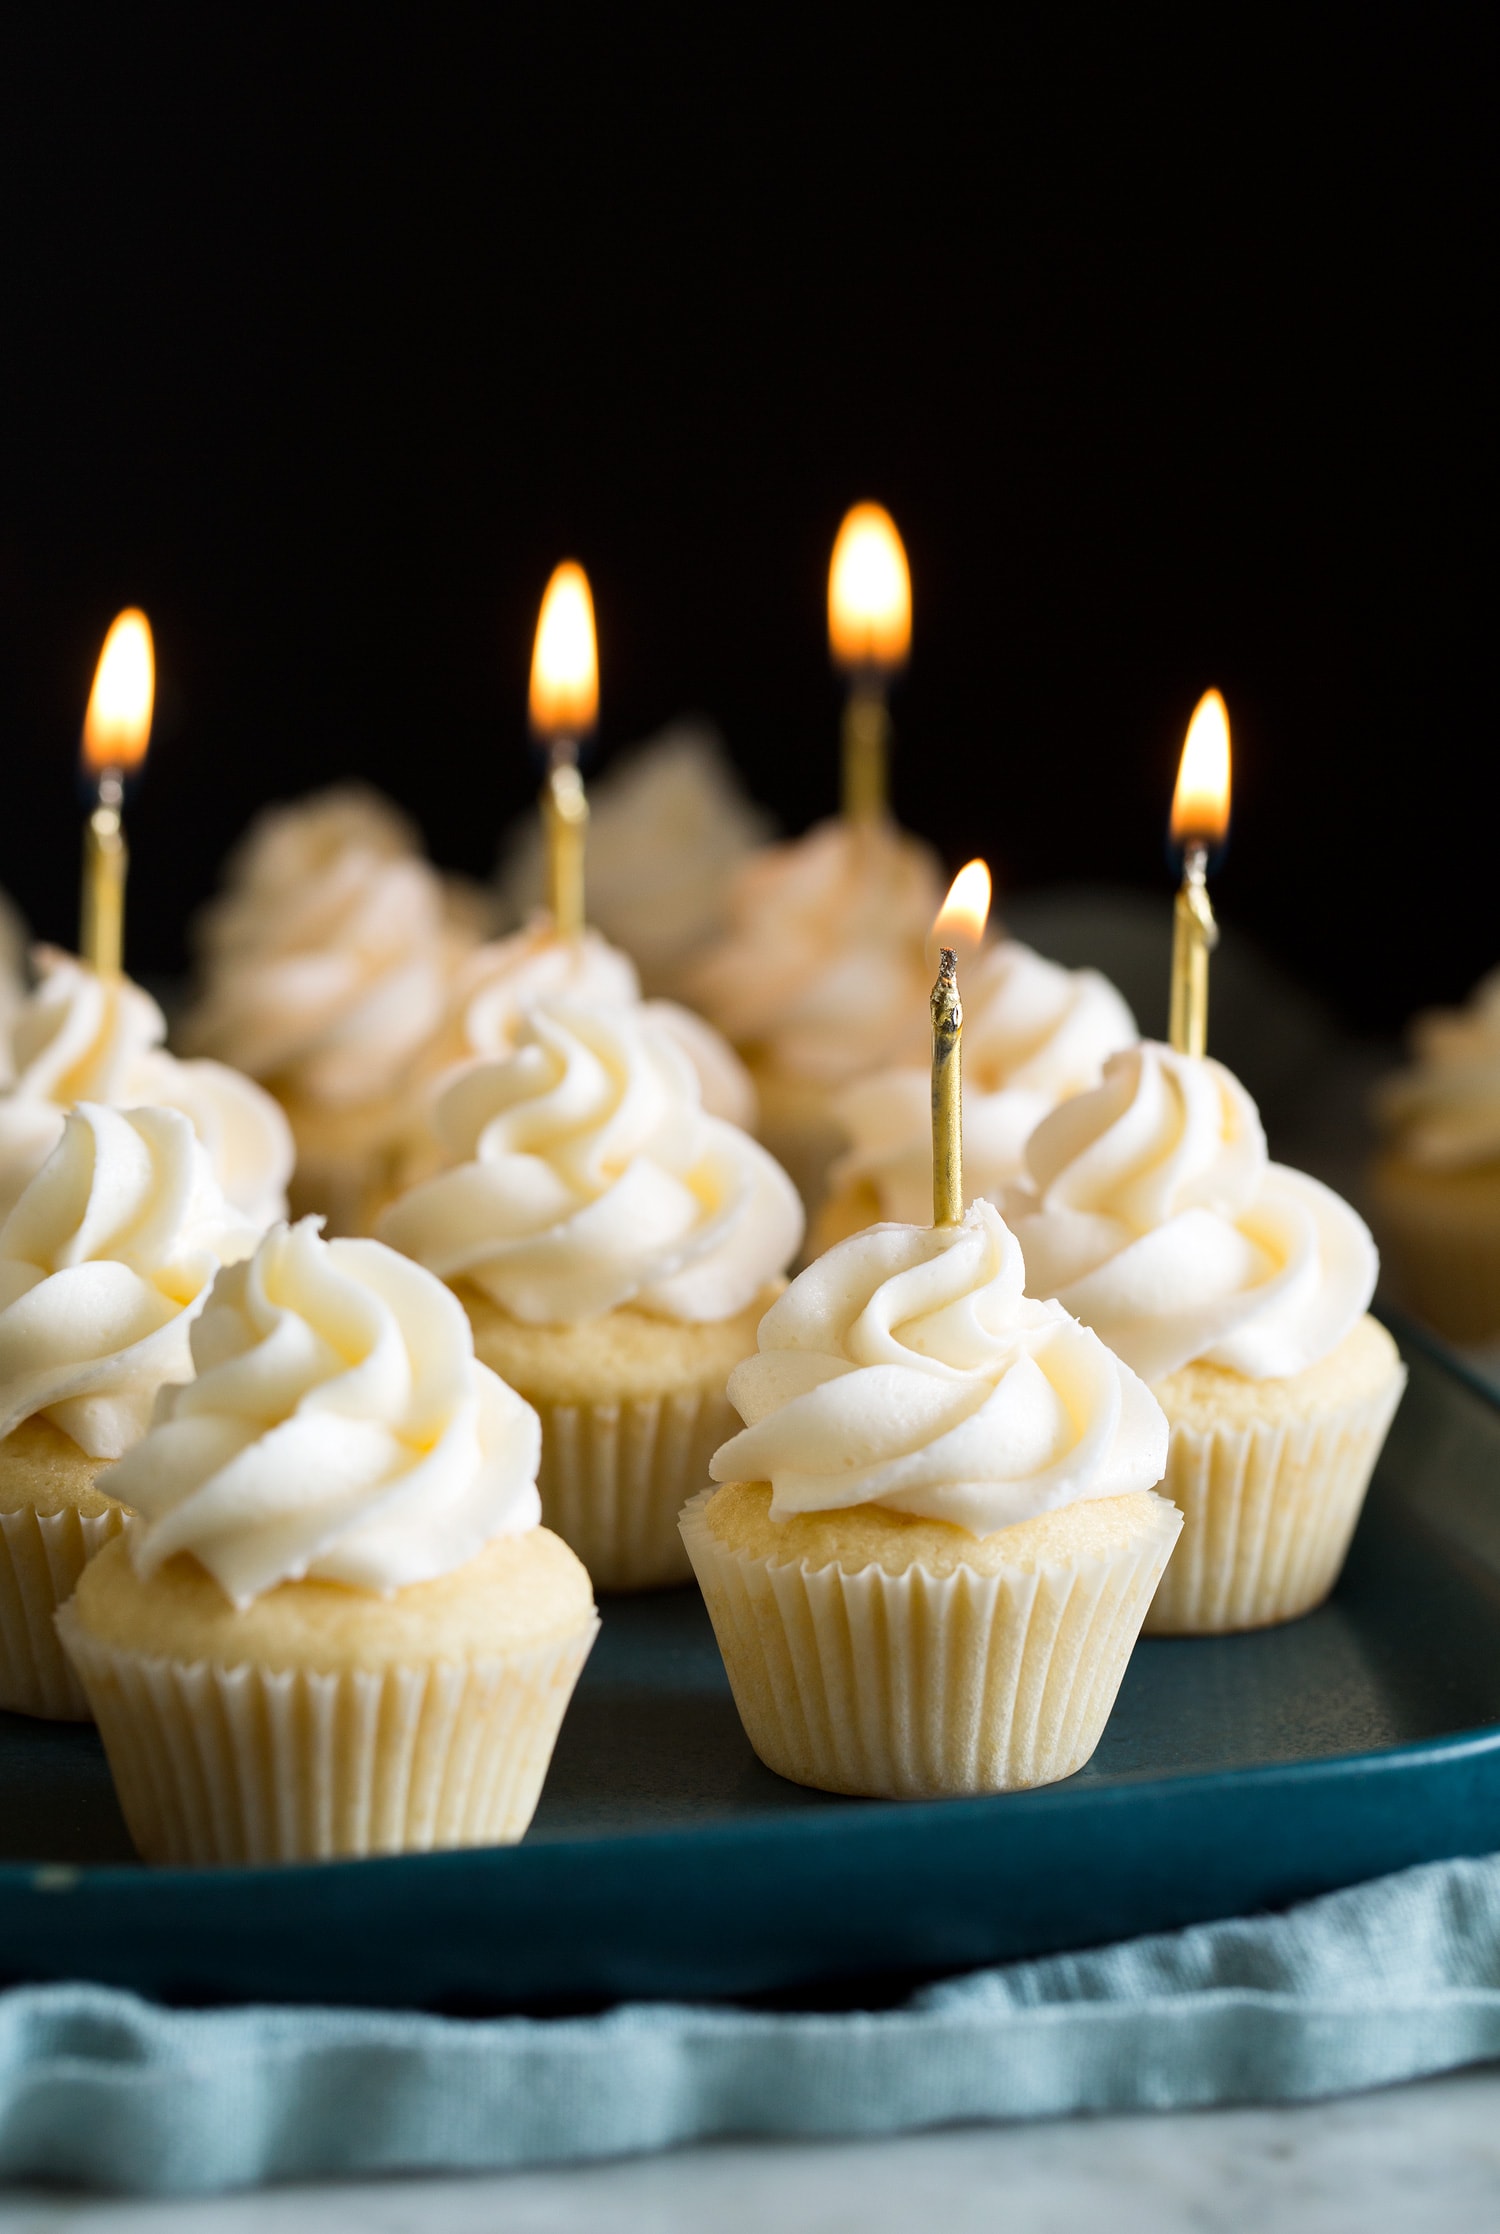 Mini cupcakes with mini lit birthday candles.